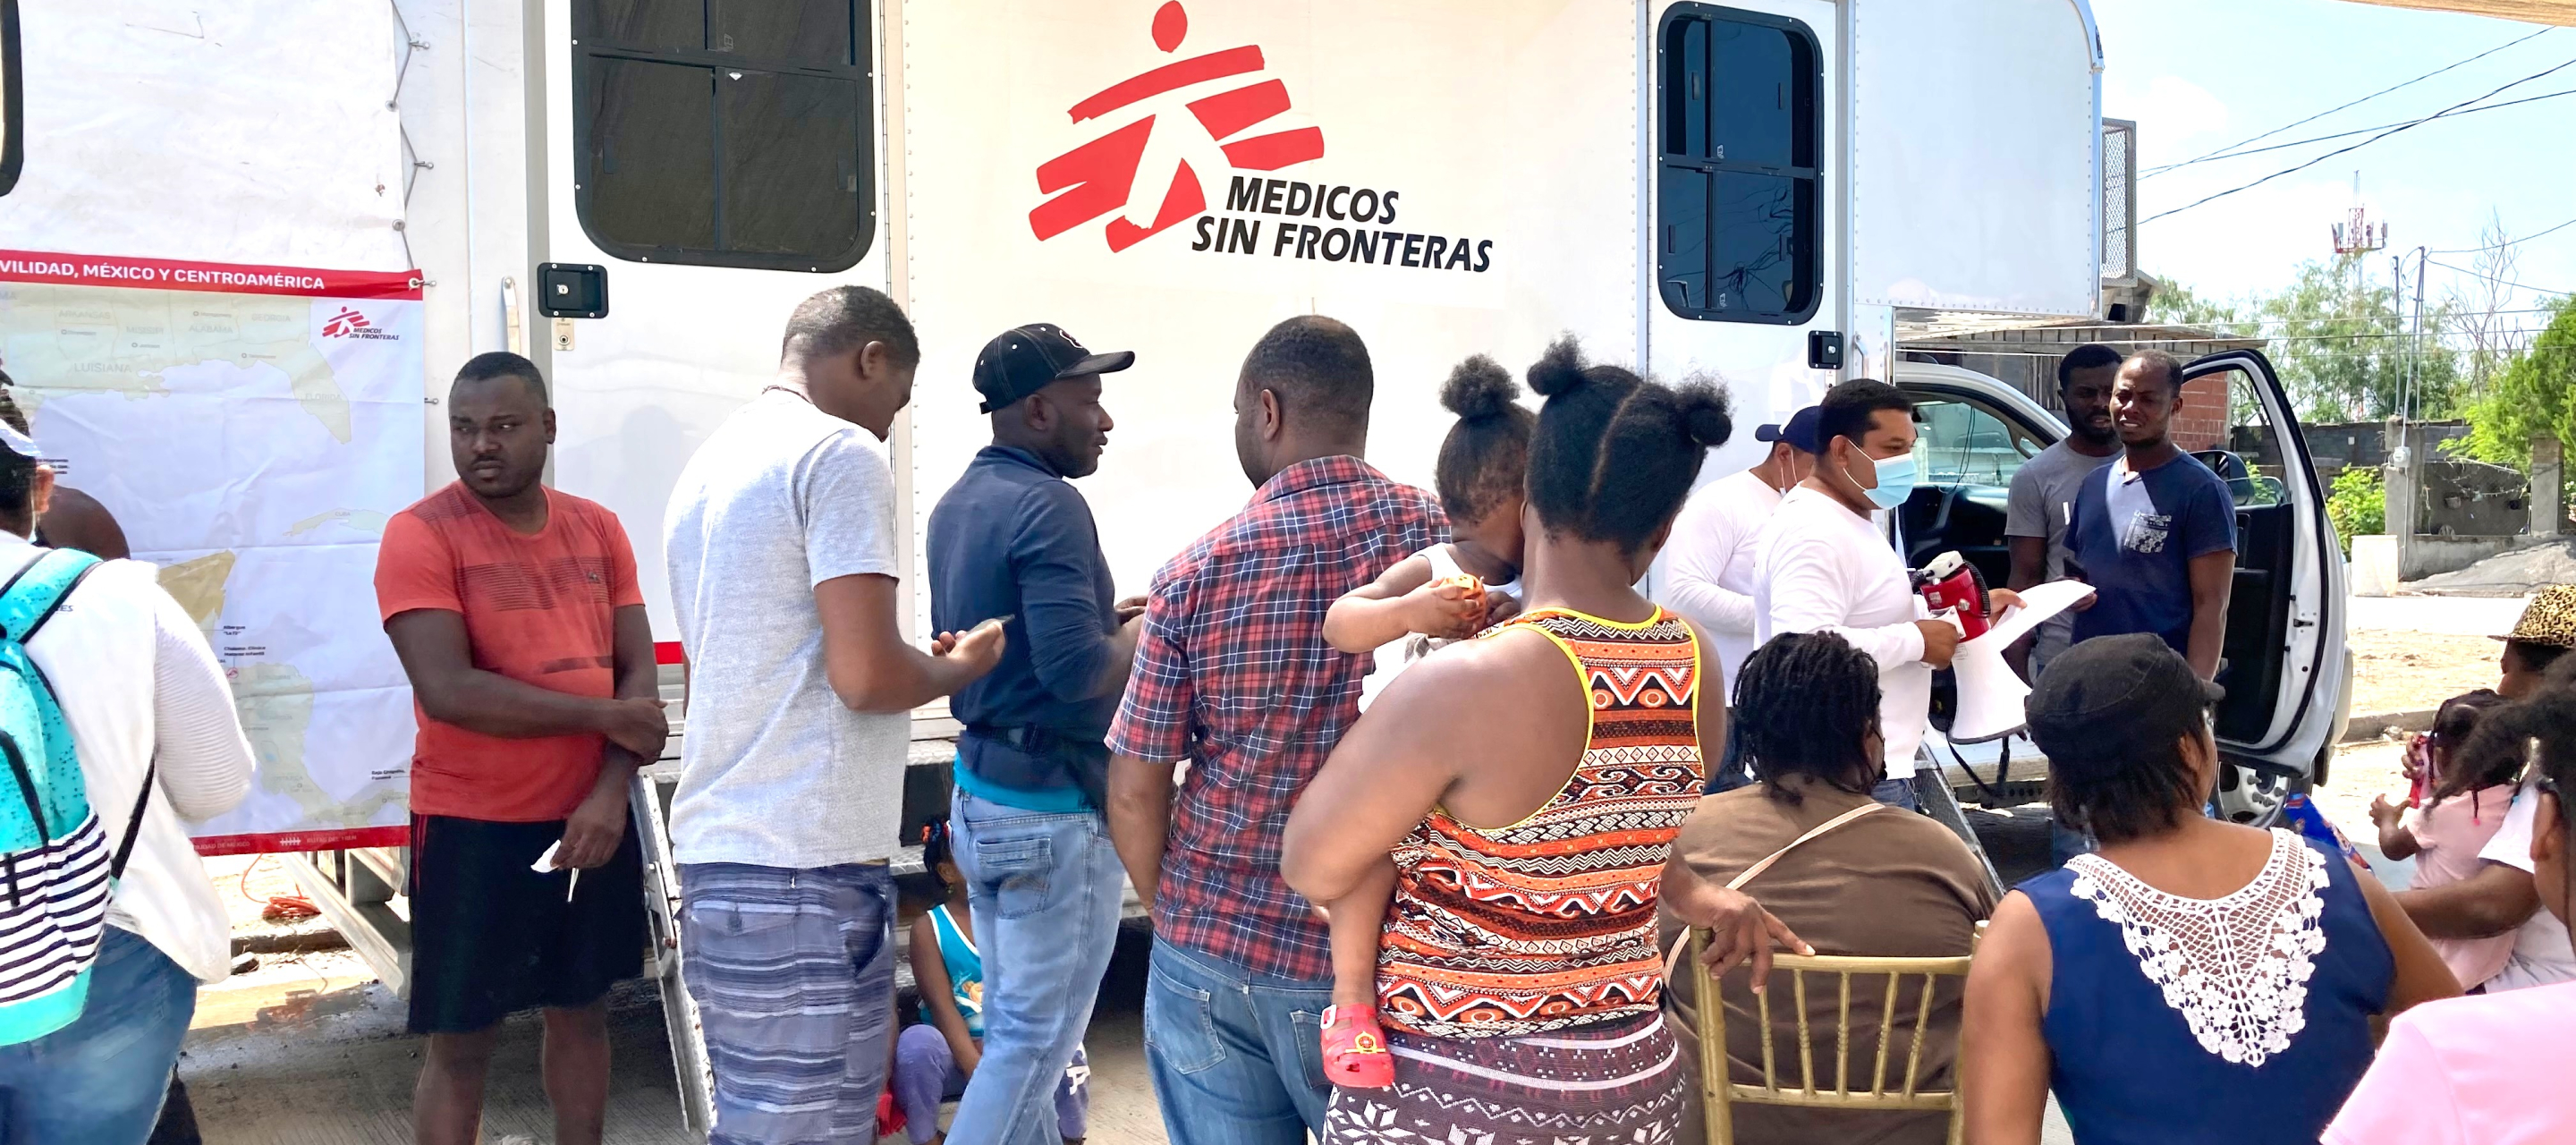 Migranten warten vor einer mobilen Klinik